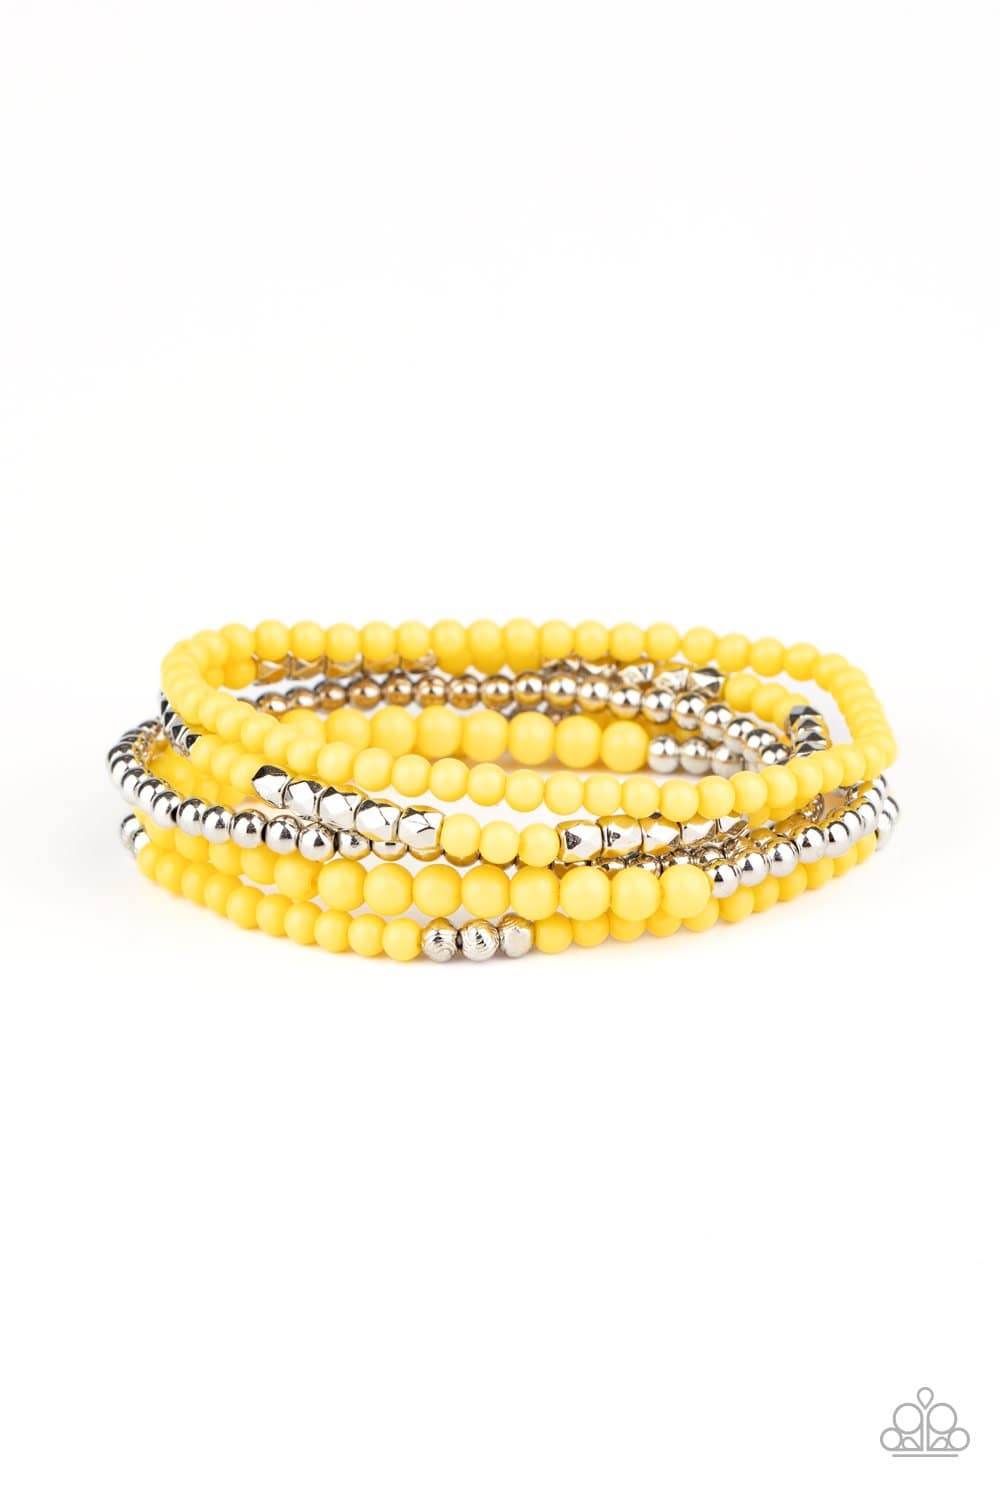 Stacked Showcase - Yellow Stretchy Bracelet - Paparazzi Accessories - GlaMarous Titi Jewels